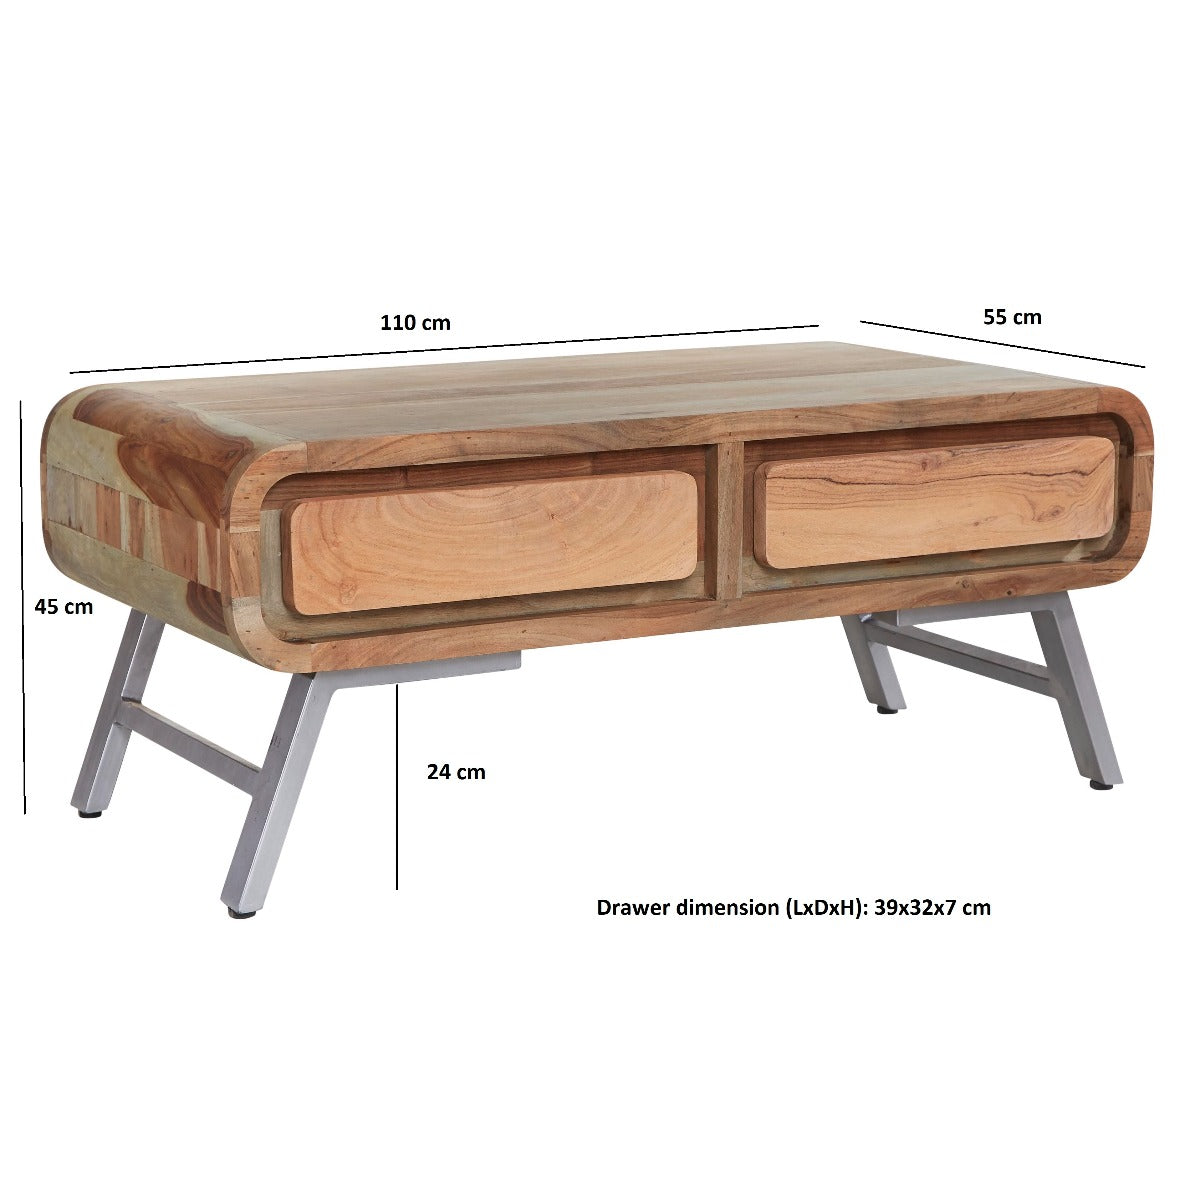 Kasia handmade solid acacia wood and reclaimed metal retro inspired coffee table | MalletandPlane.com